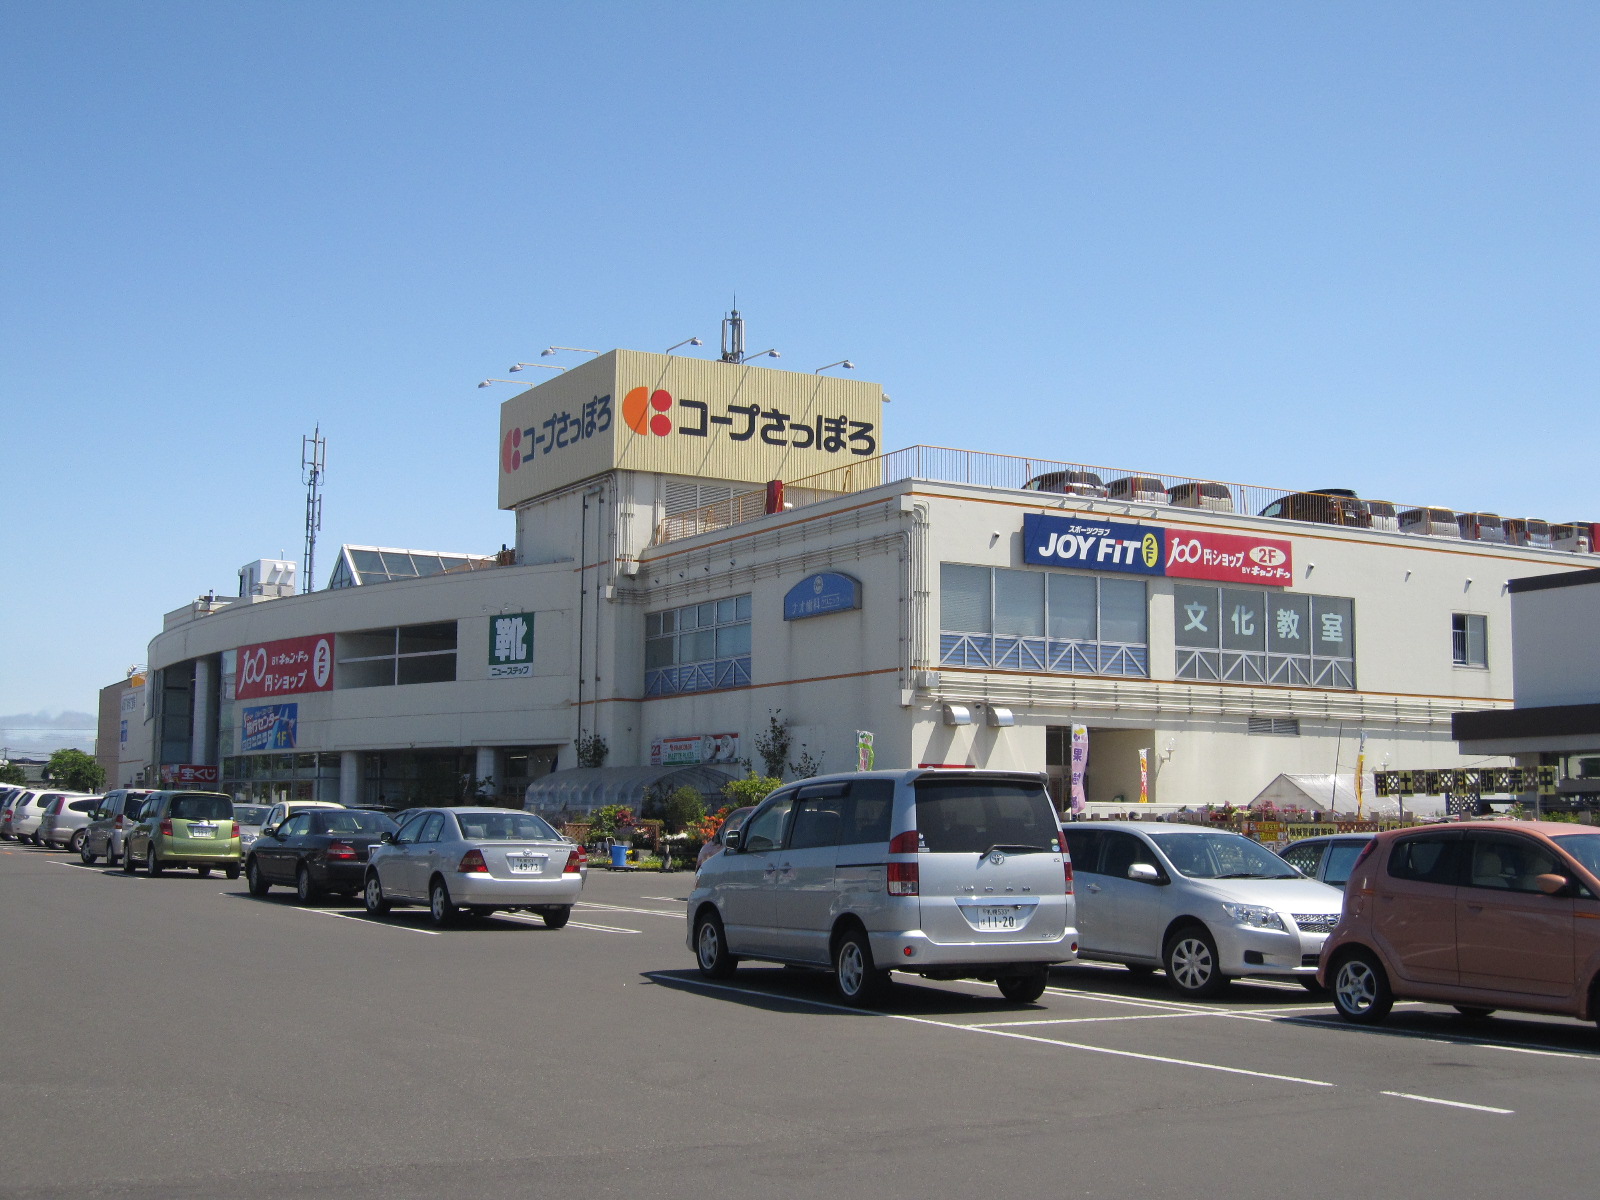 Supermarket. KopuSapporo Hiraoka store up to (super) 1574m